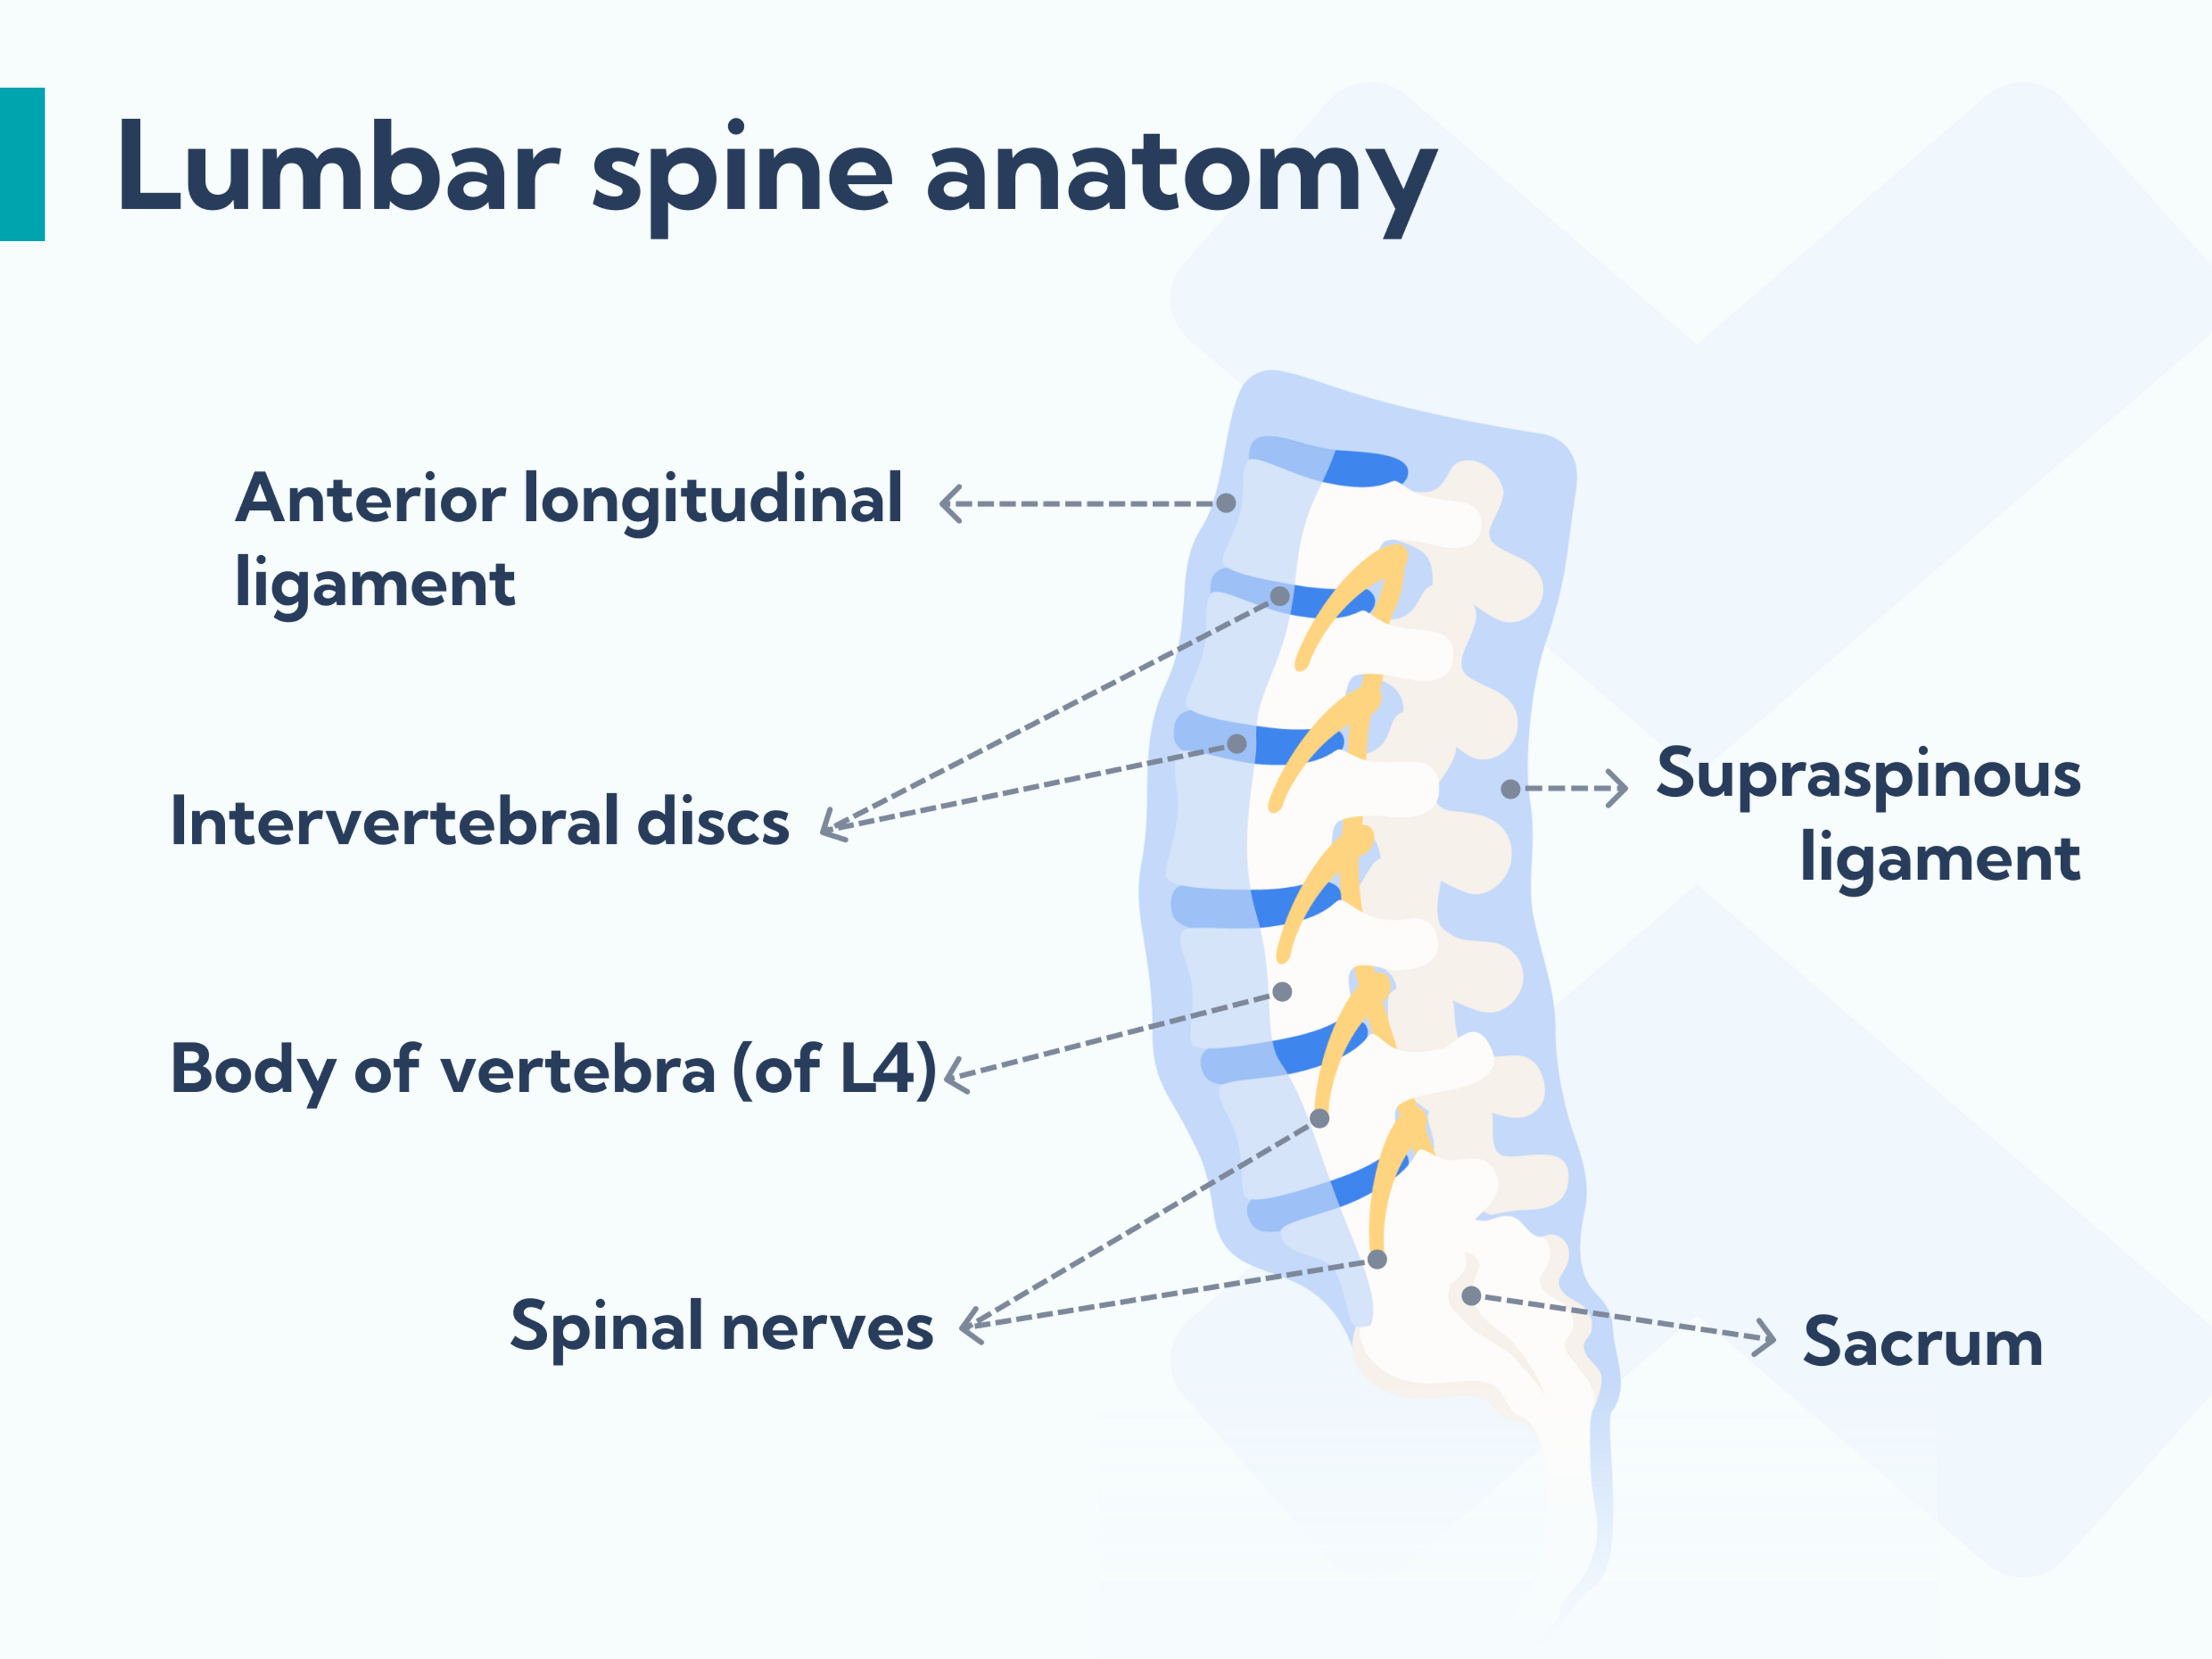 Lumbar spine anatomy where lower back pain is felt.